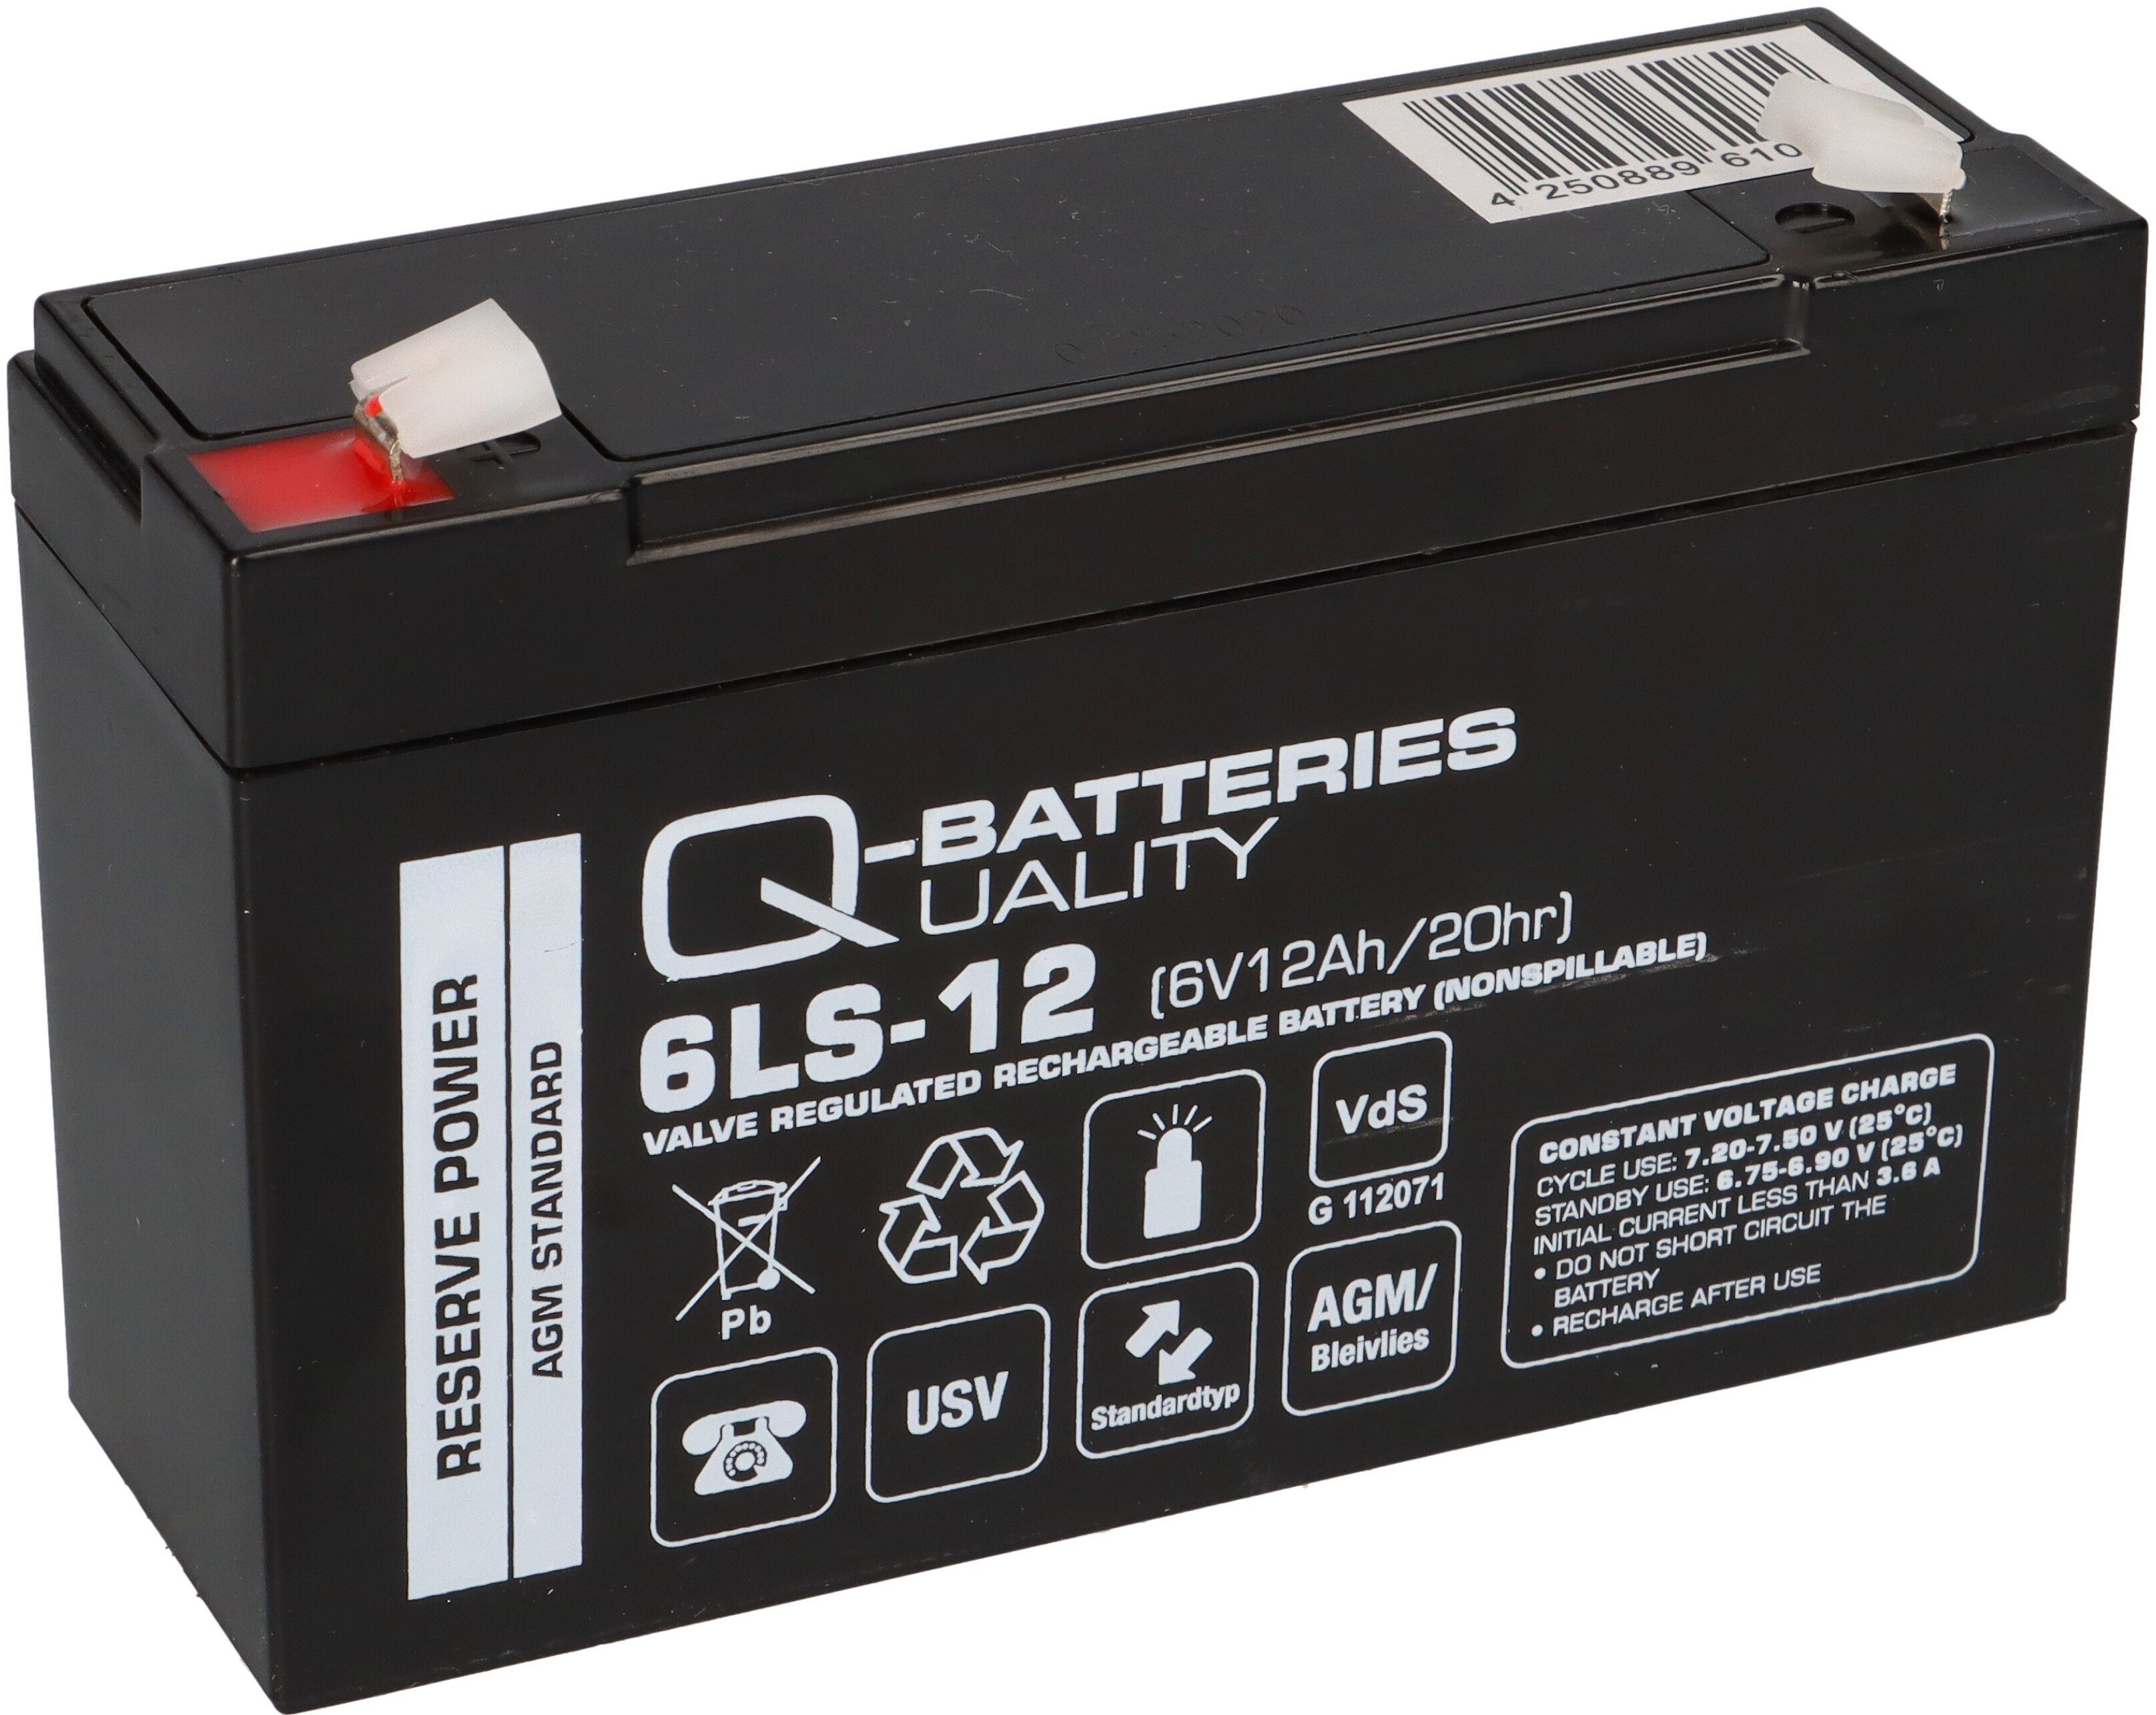 6LS-12 Q-Batteries Blei-Vlies AGM Akku VRLA Q-Batteries VdS 6V 12Ah Bleiakkus mit /